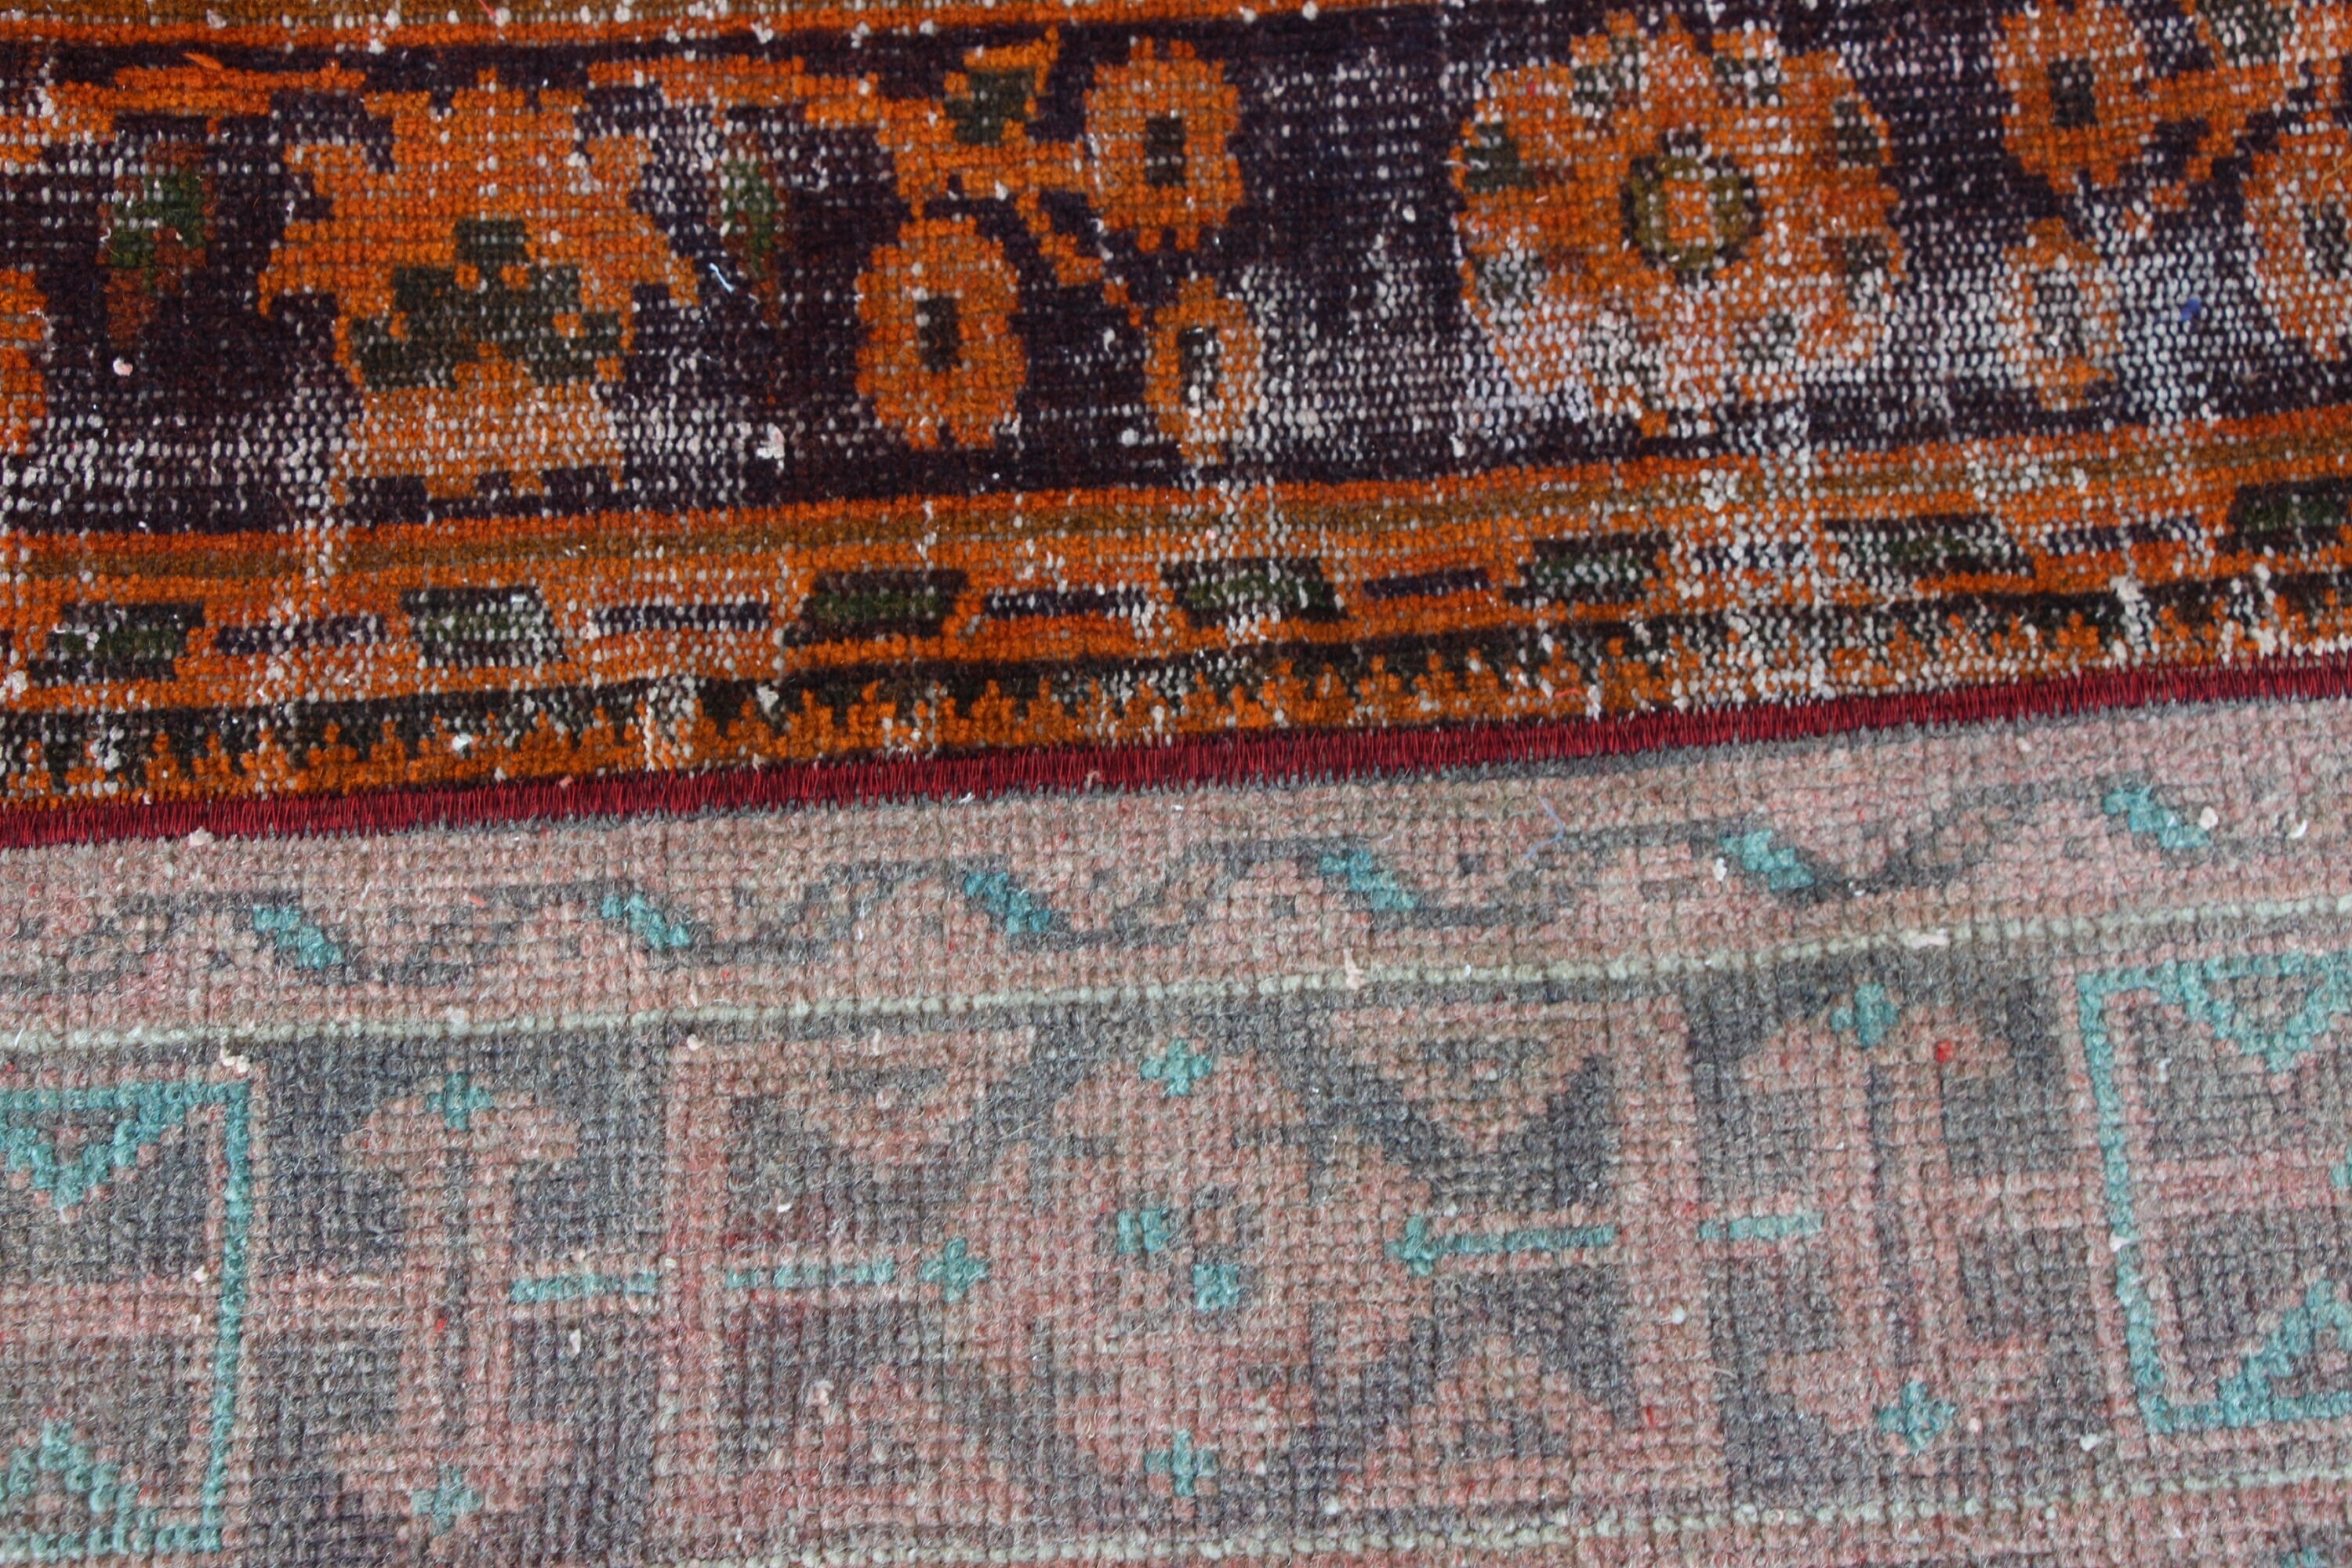 Cute Rug, Turkish Rugs, Vintage Rug, Antique Rug, Bedroom Rugs, 1.8x3.2 ft Small Rugs, Wall Hanging Rugs, Kitchen Rug, Orange Moroccan Rugs